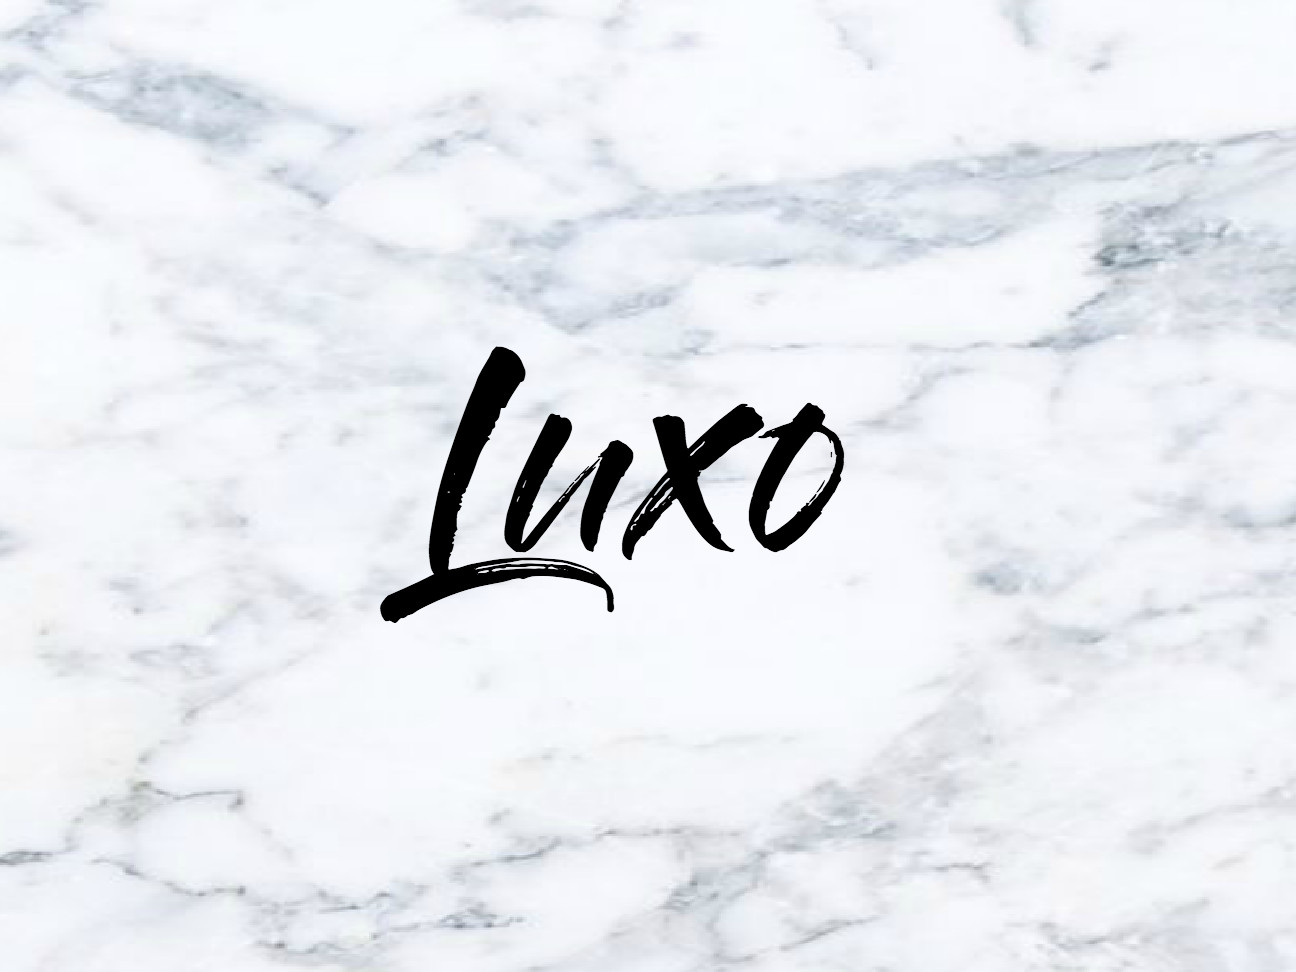 Luxo.png